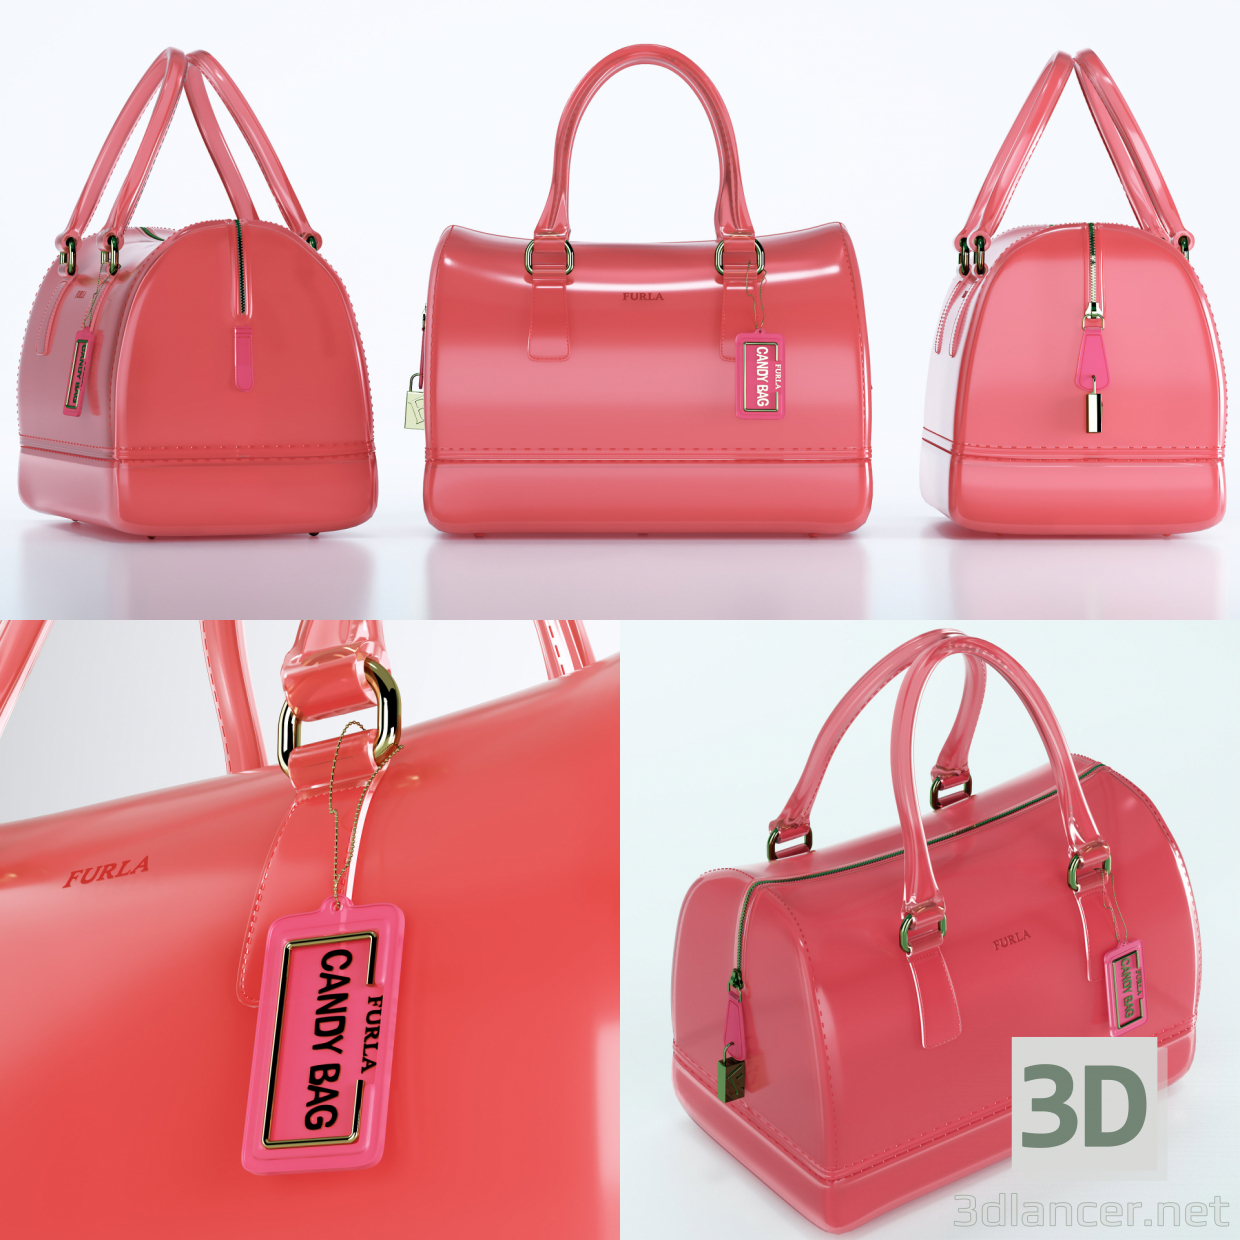 3D Modell Furla Candy Bauletto Tasche - Vorschau